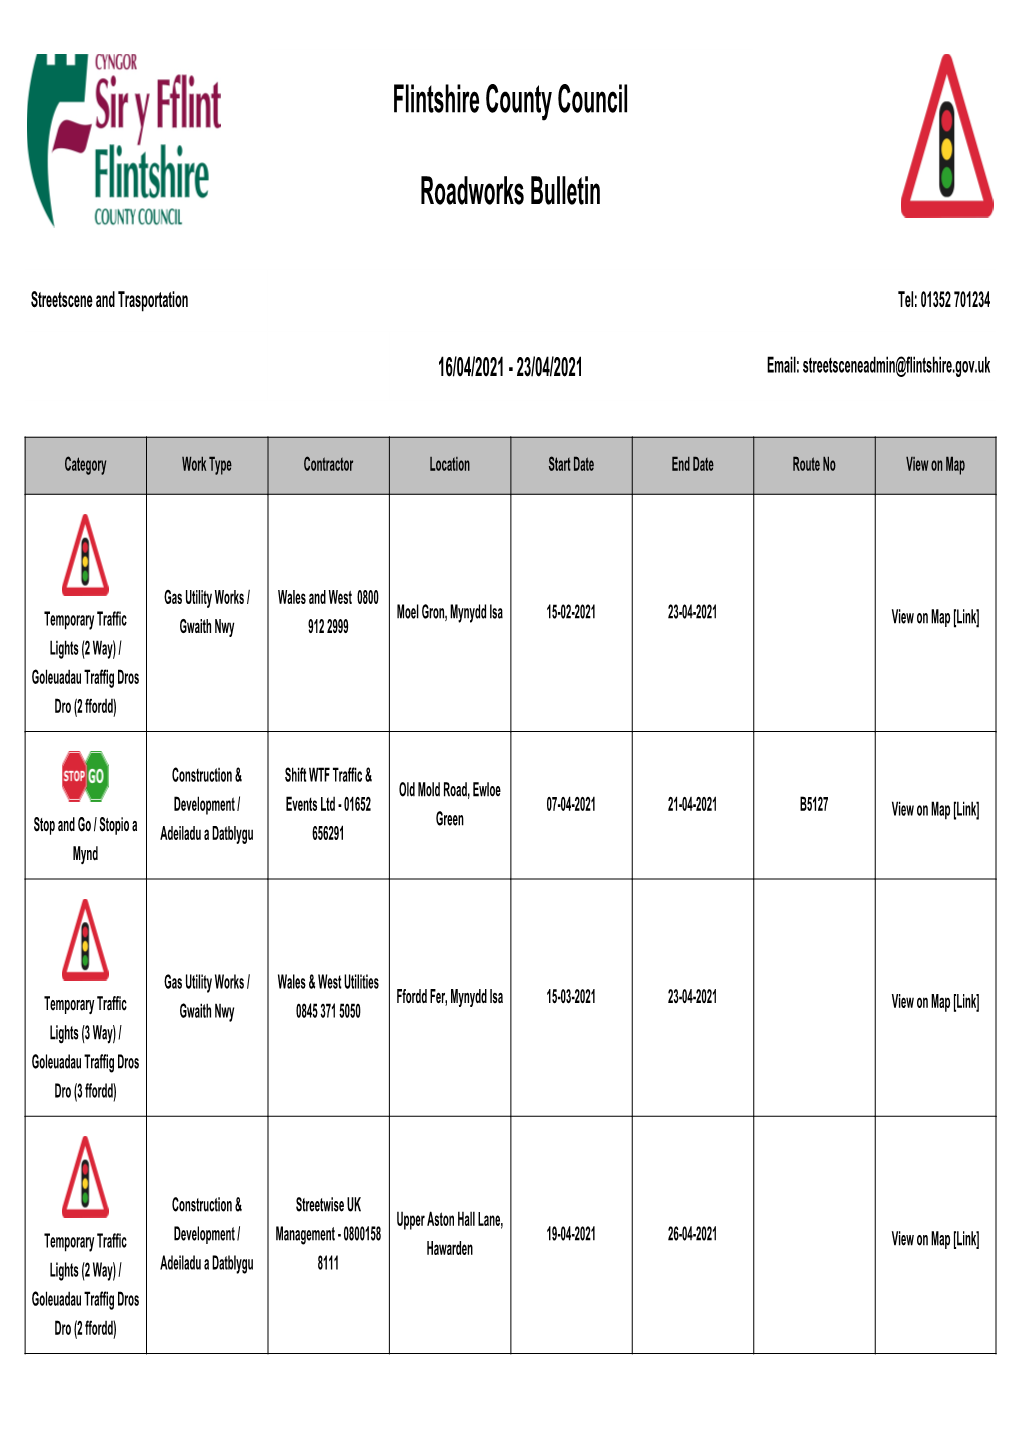 Flintshire County Council Roadworks Bulletin